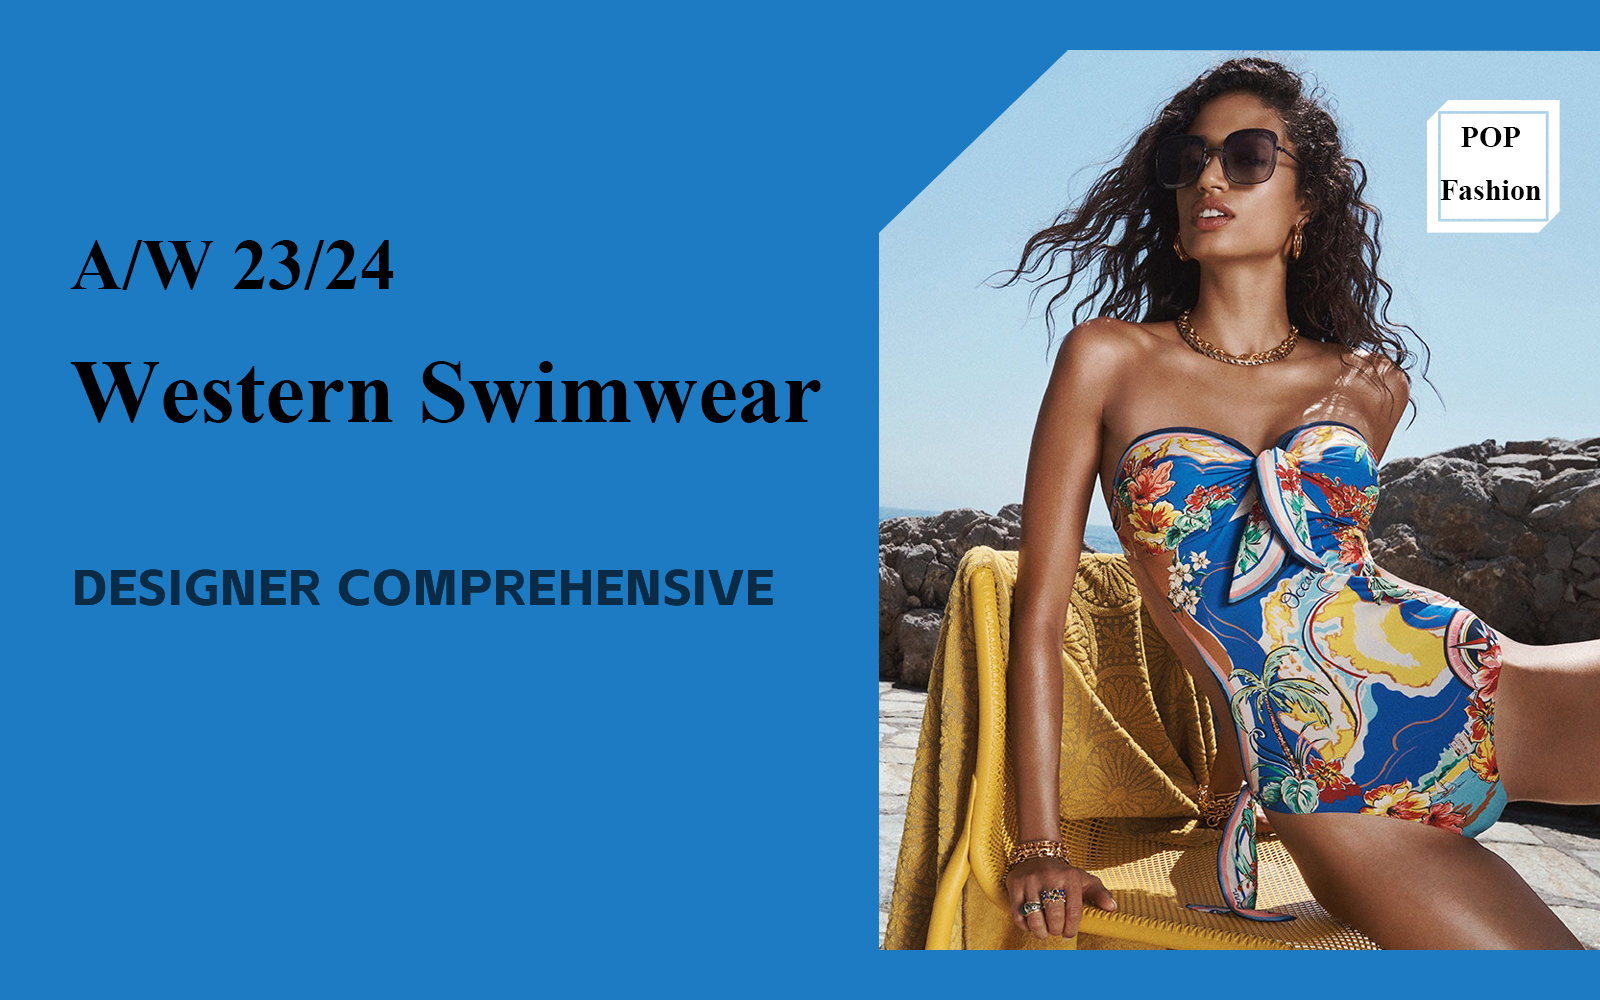 The Comprehensive Analysis of European and American Swimwear Designer Brands